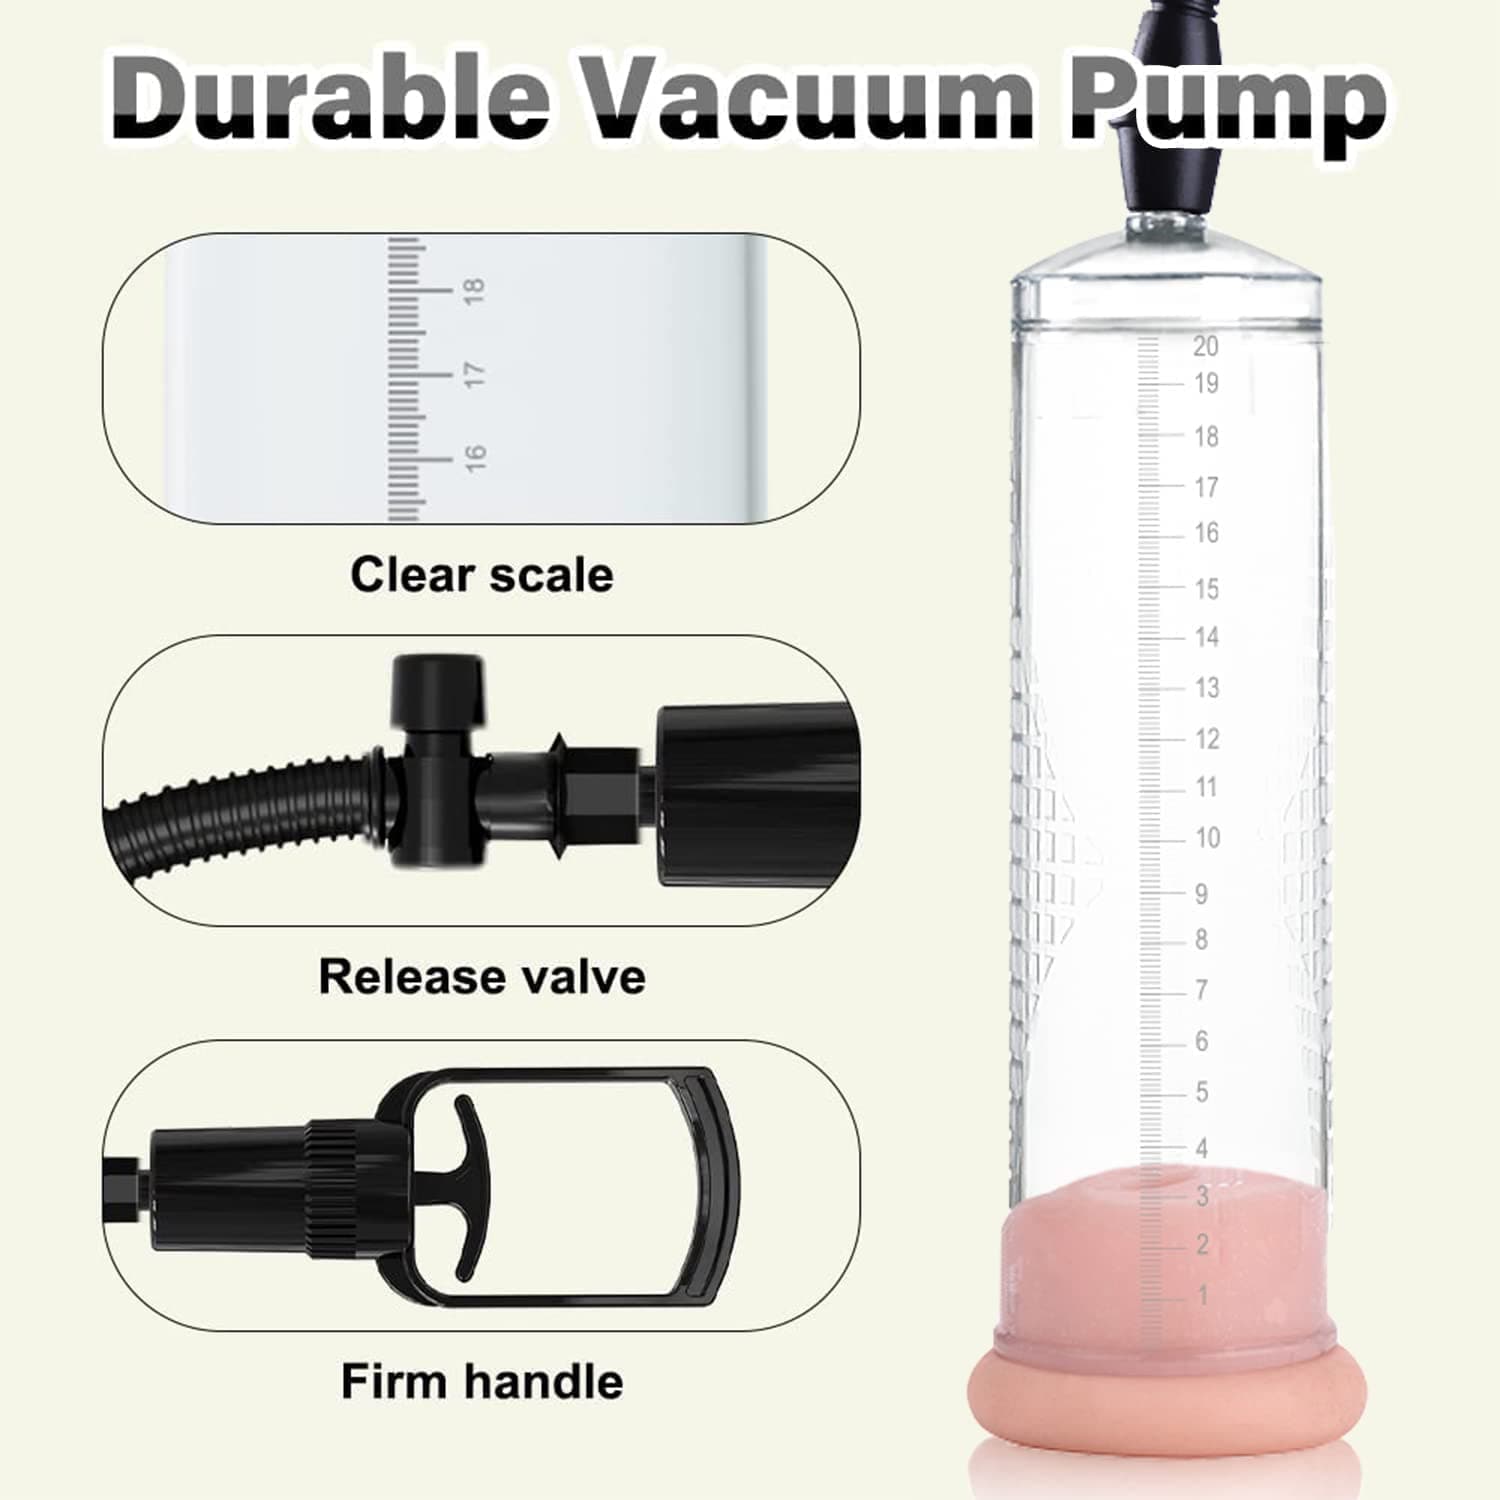 Penis pump set - penis vacuum pump, 3 penis rings, 3 different sizes of silicone sleeves